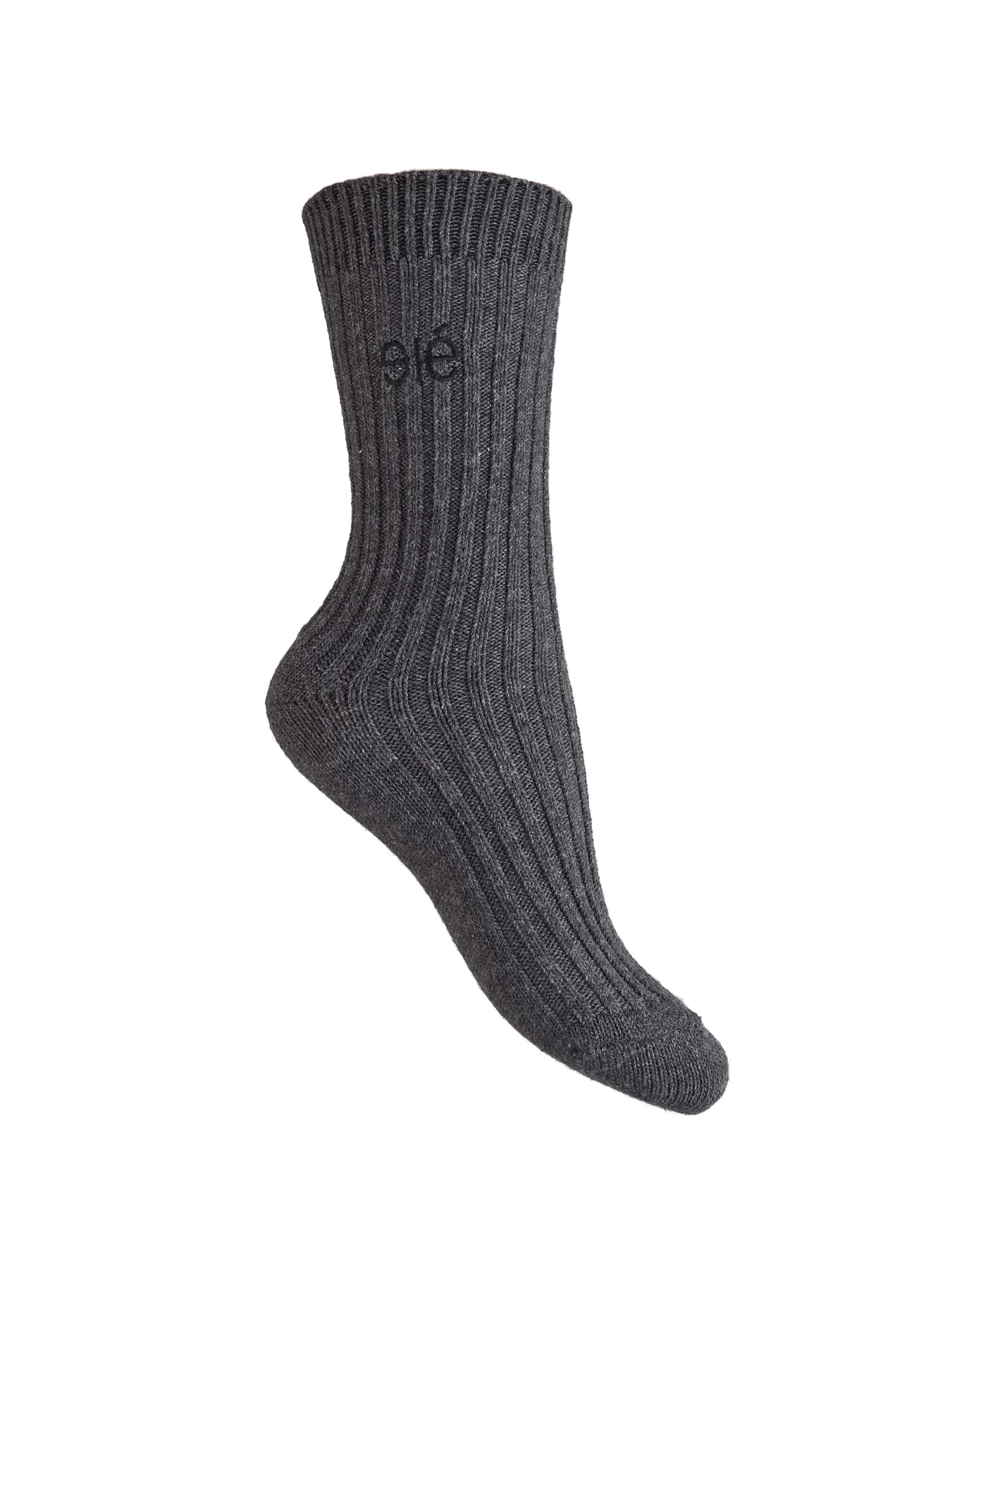 Yoyo socks, Charcoal Grey